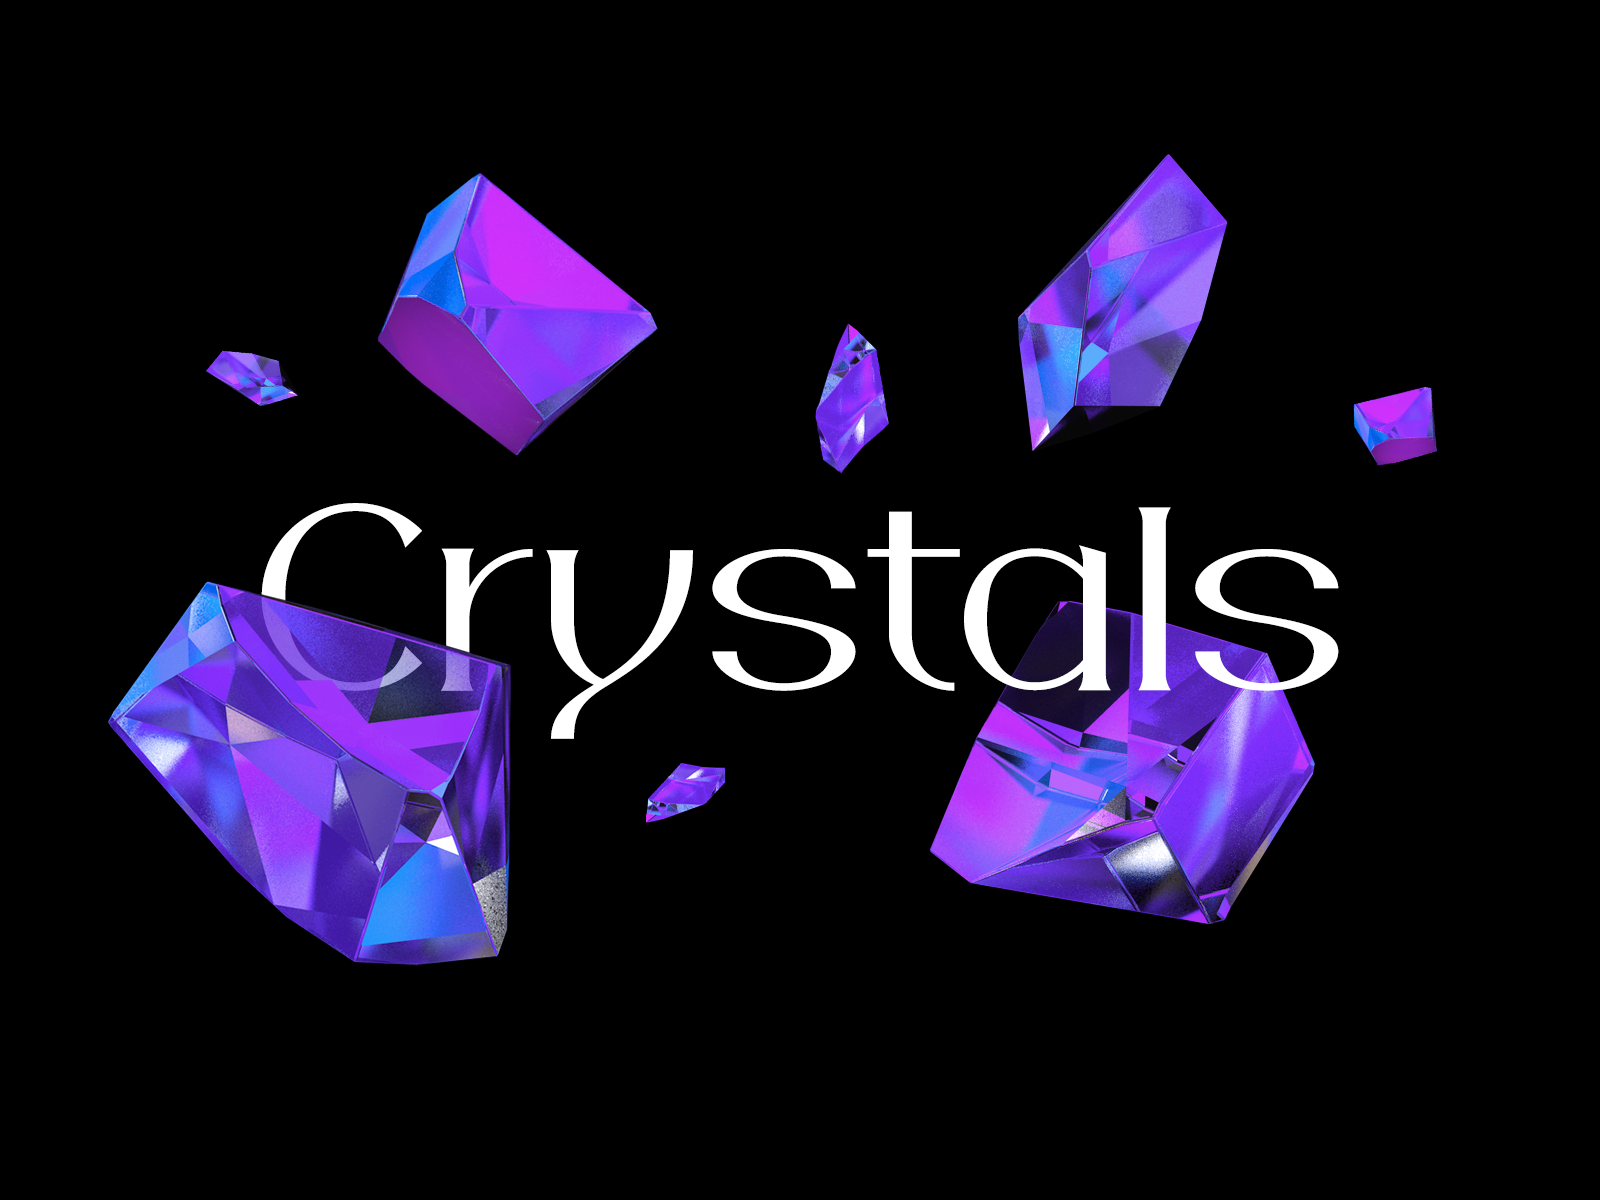 Crystals by Filip Lichtneker on Dribbble